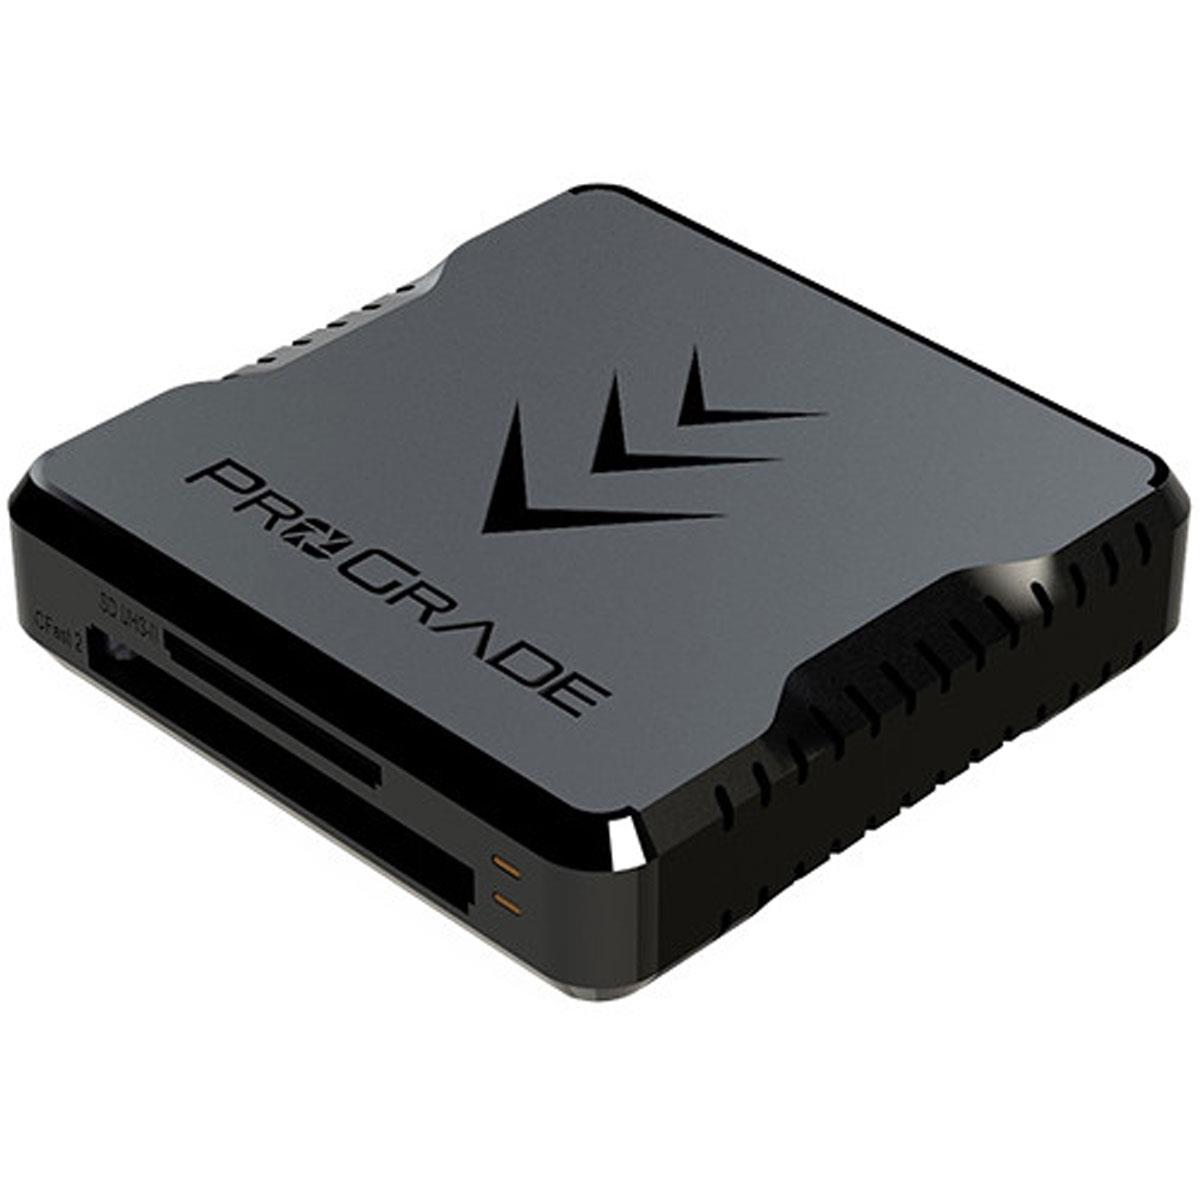 

Prograde Digital ProGrade Digital Dual-Slot CFast 2.0 & UHS-II SDXC USB 3.1 Type-C Card Reader